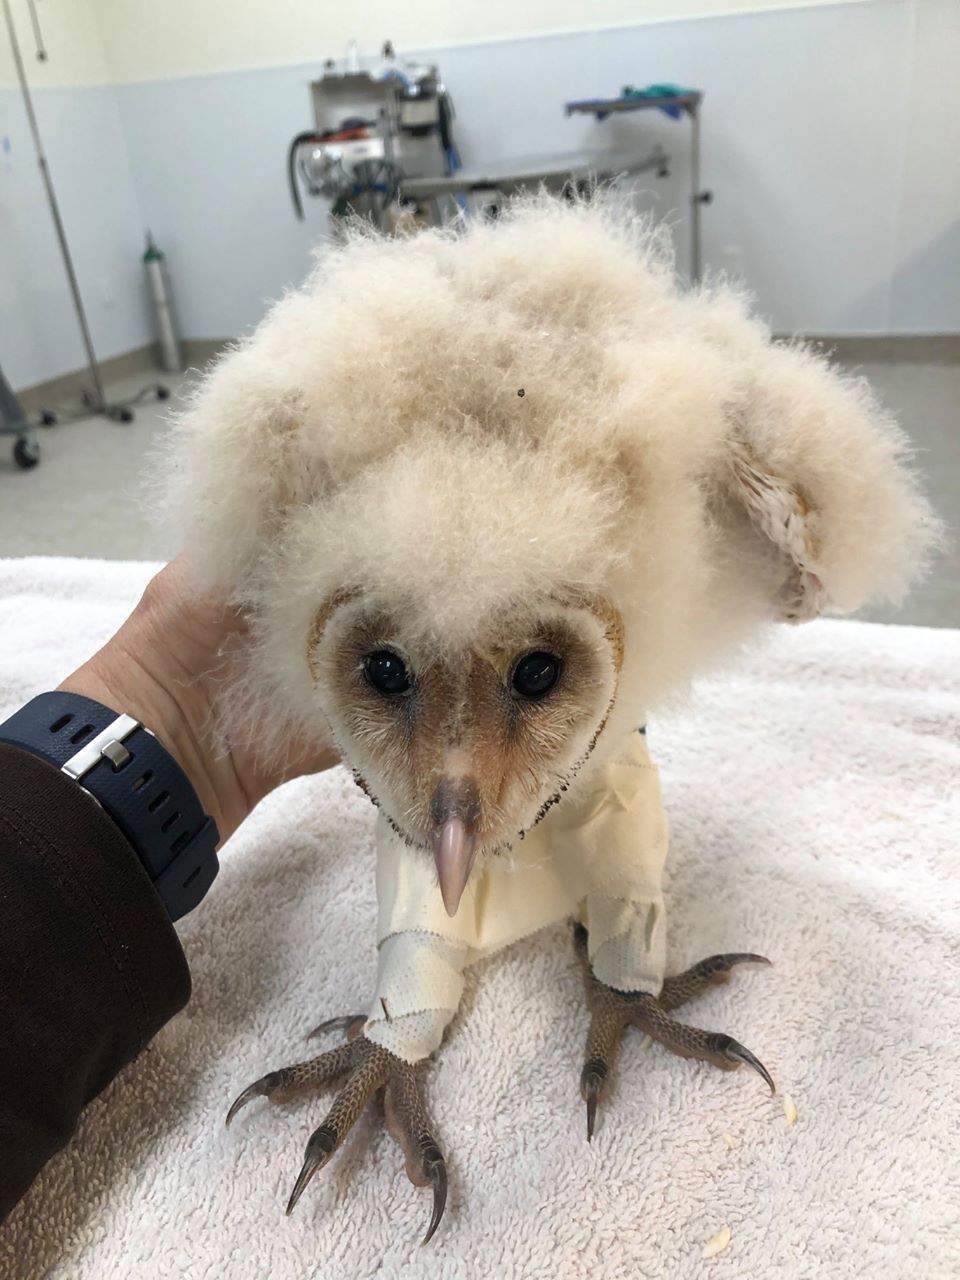 Houston SPCA’s Wildlife Center nursing baby owl back to health after nasty fall